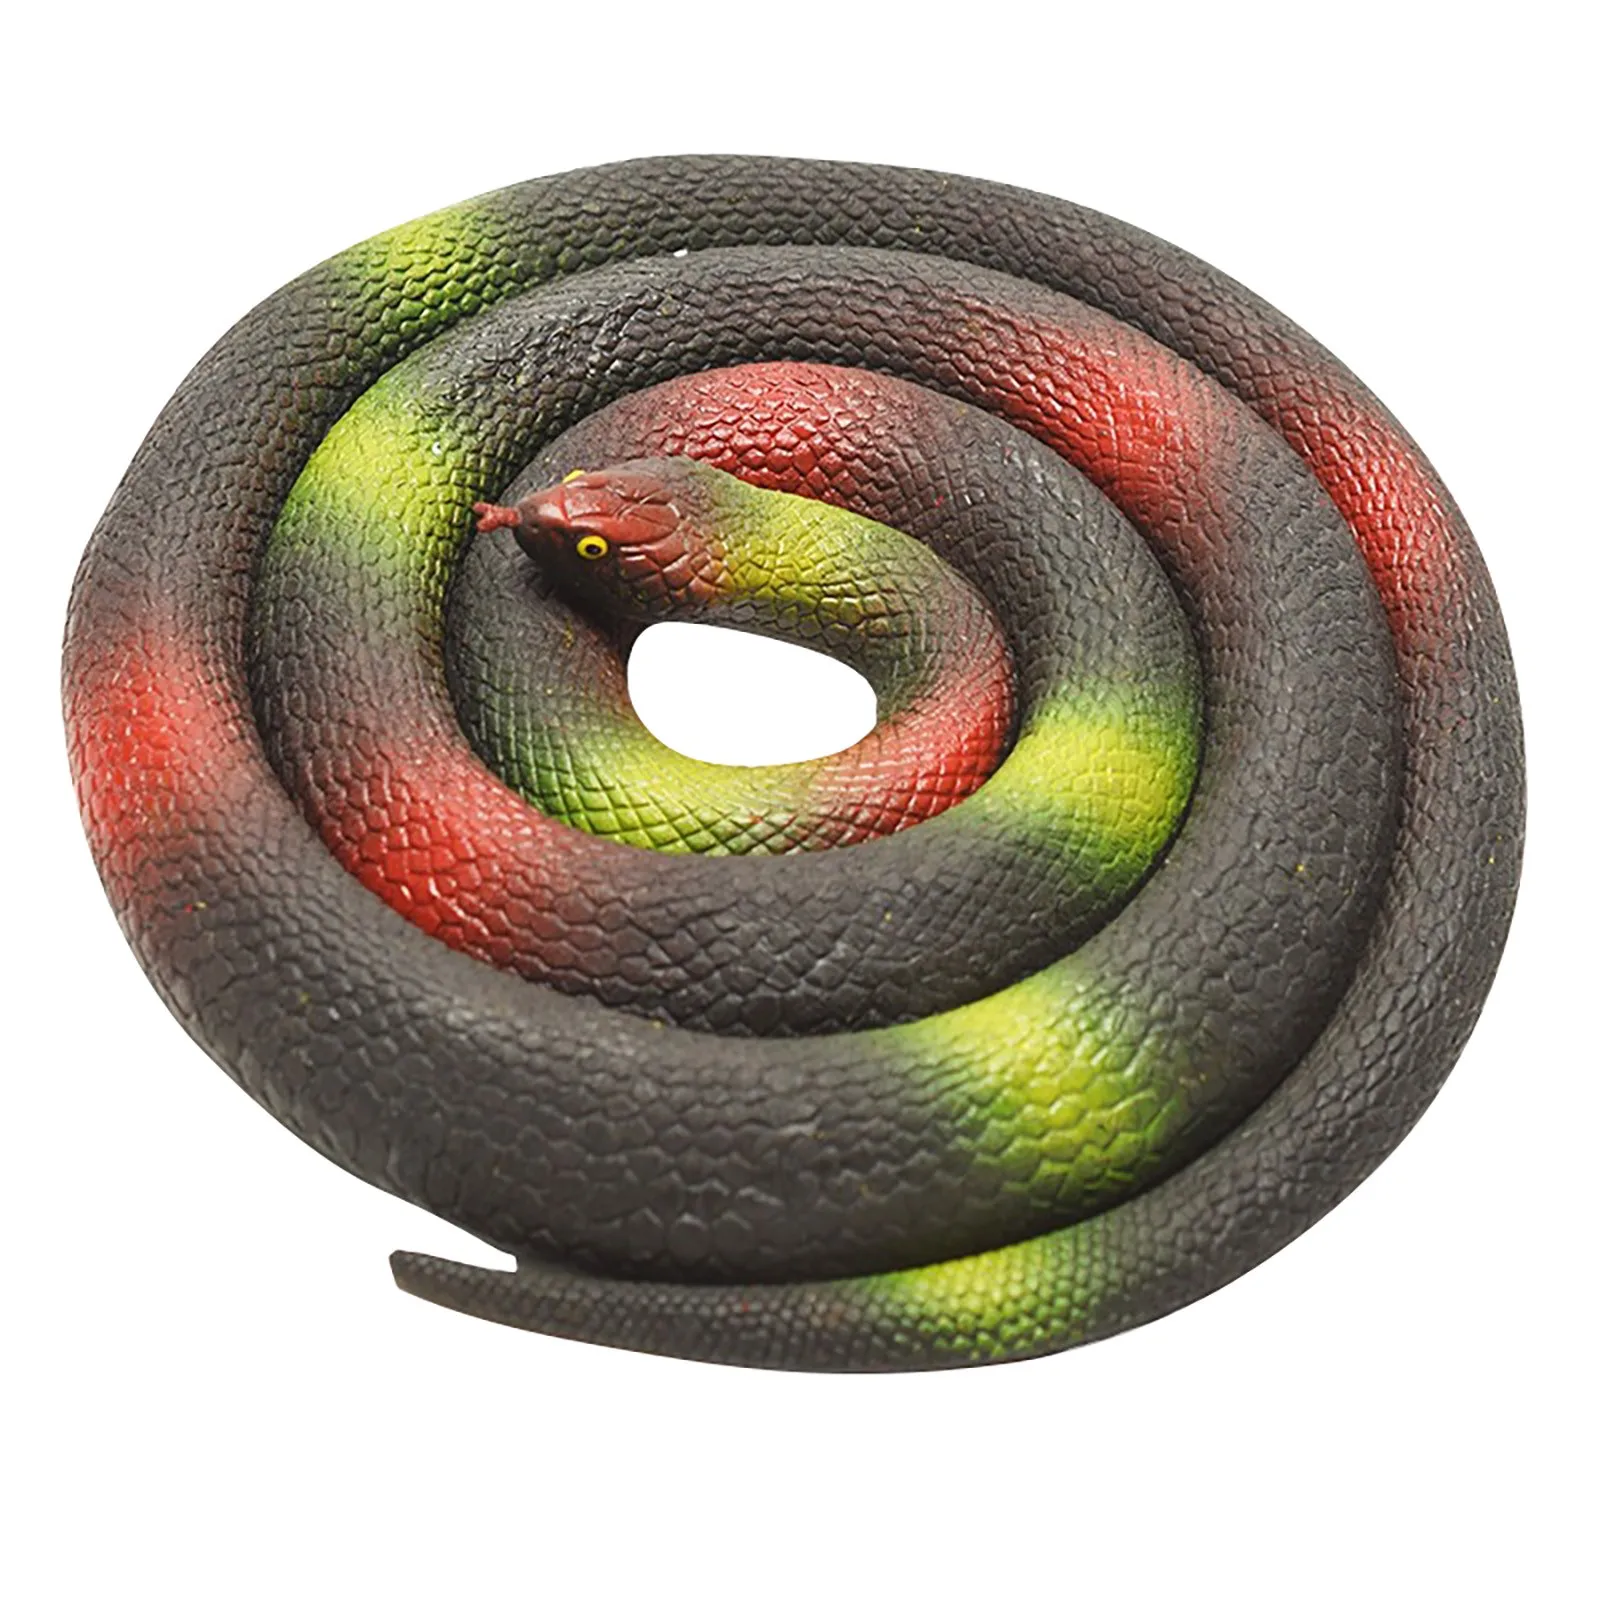 Novelty & Gag Toys Gag Toys & Practical Jokes Balacoo Rubber Fake Snake ...